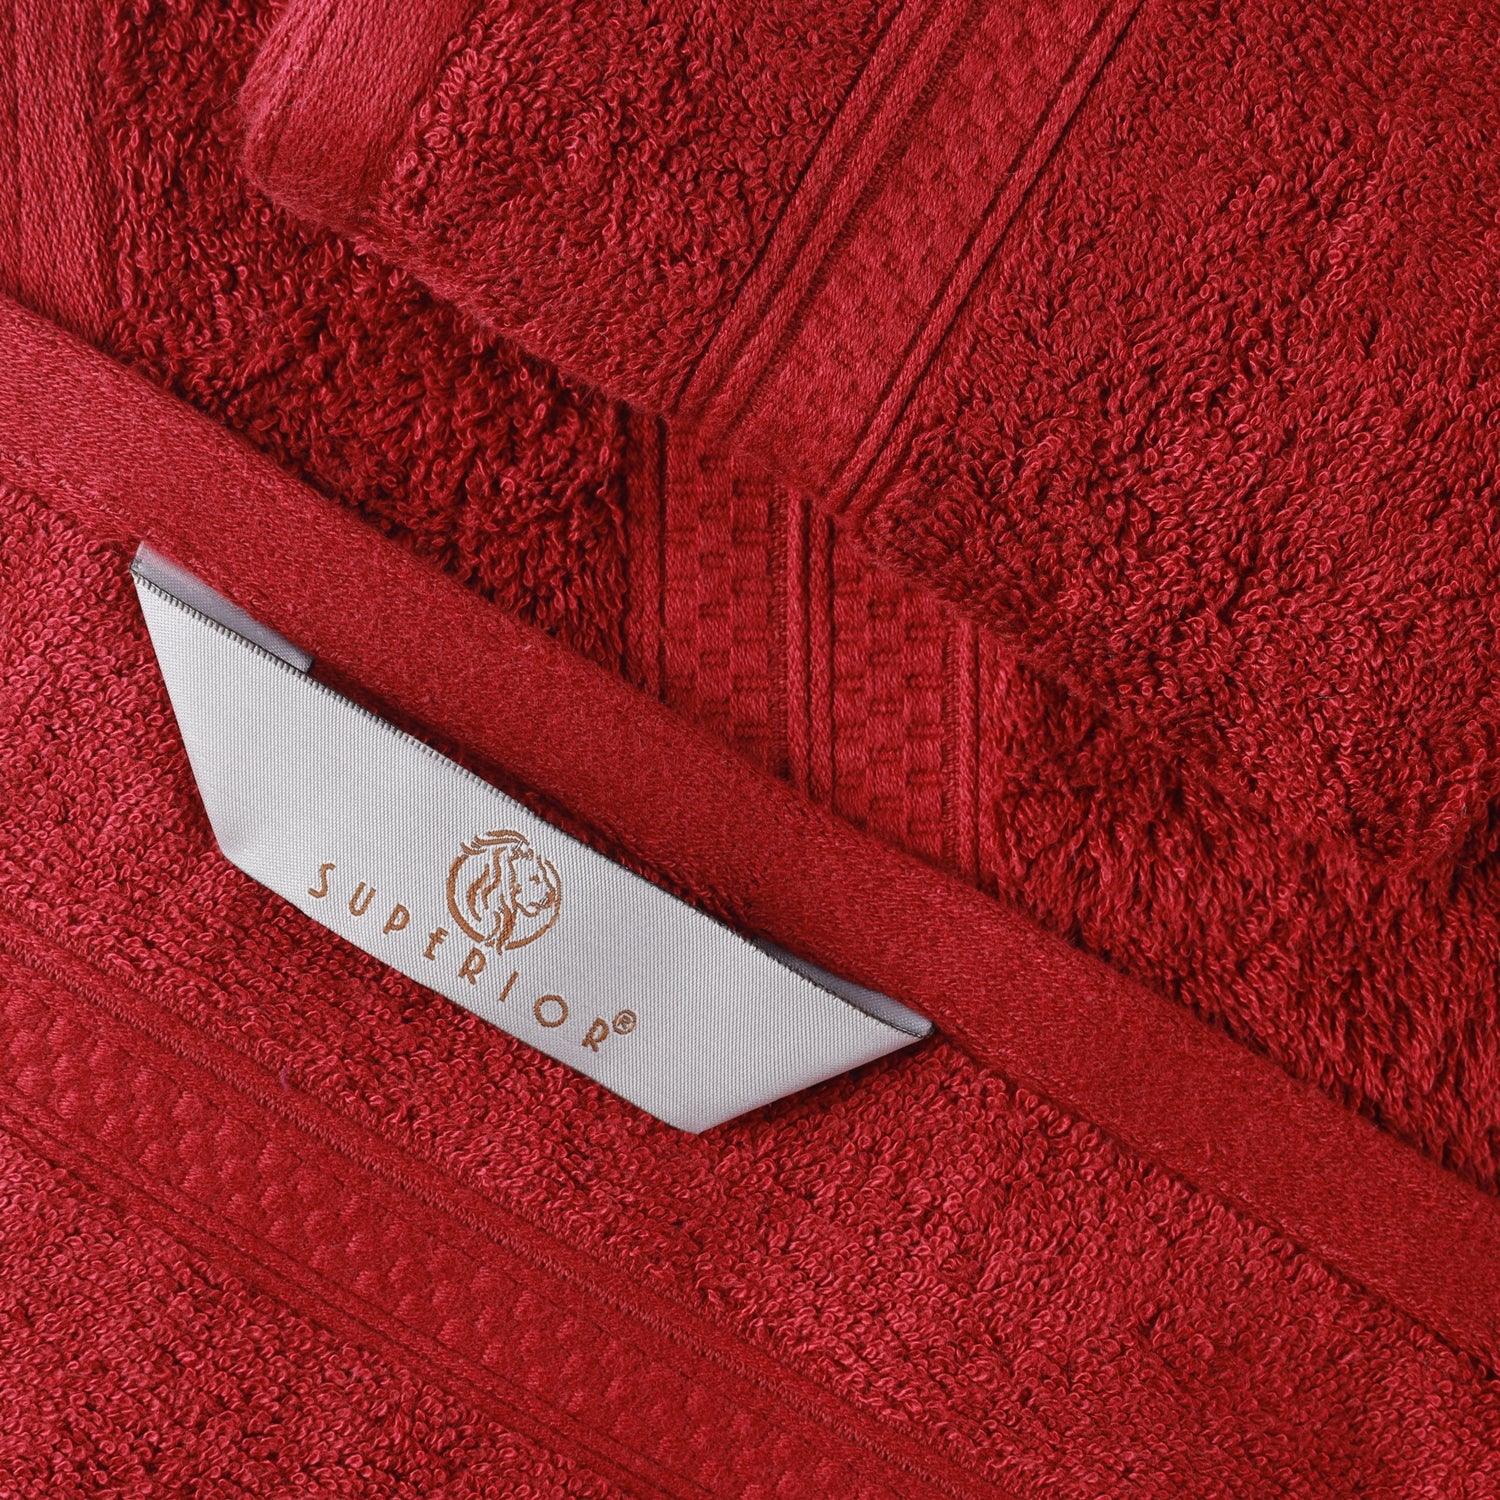 Rayon from Bamboo Ultra-Plush Heavyweight Assorted 12-Piece Towel Set - Crimson